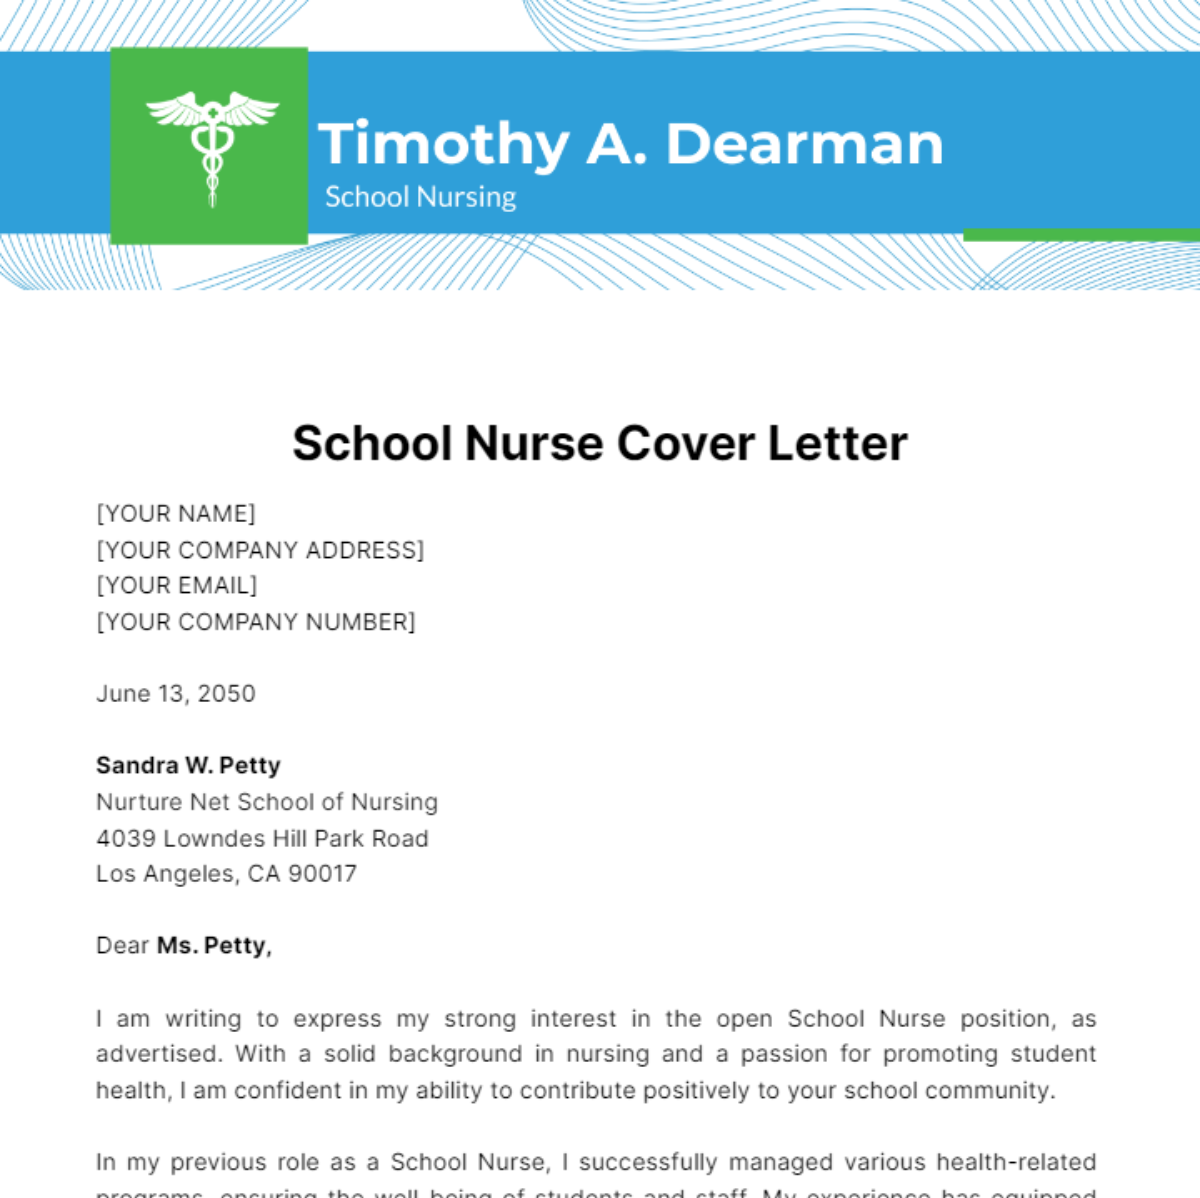 School Nurse Cover Letter Template